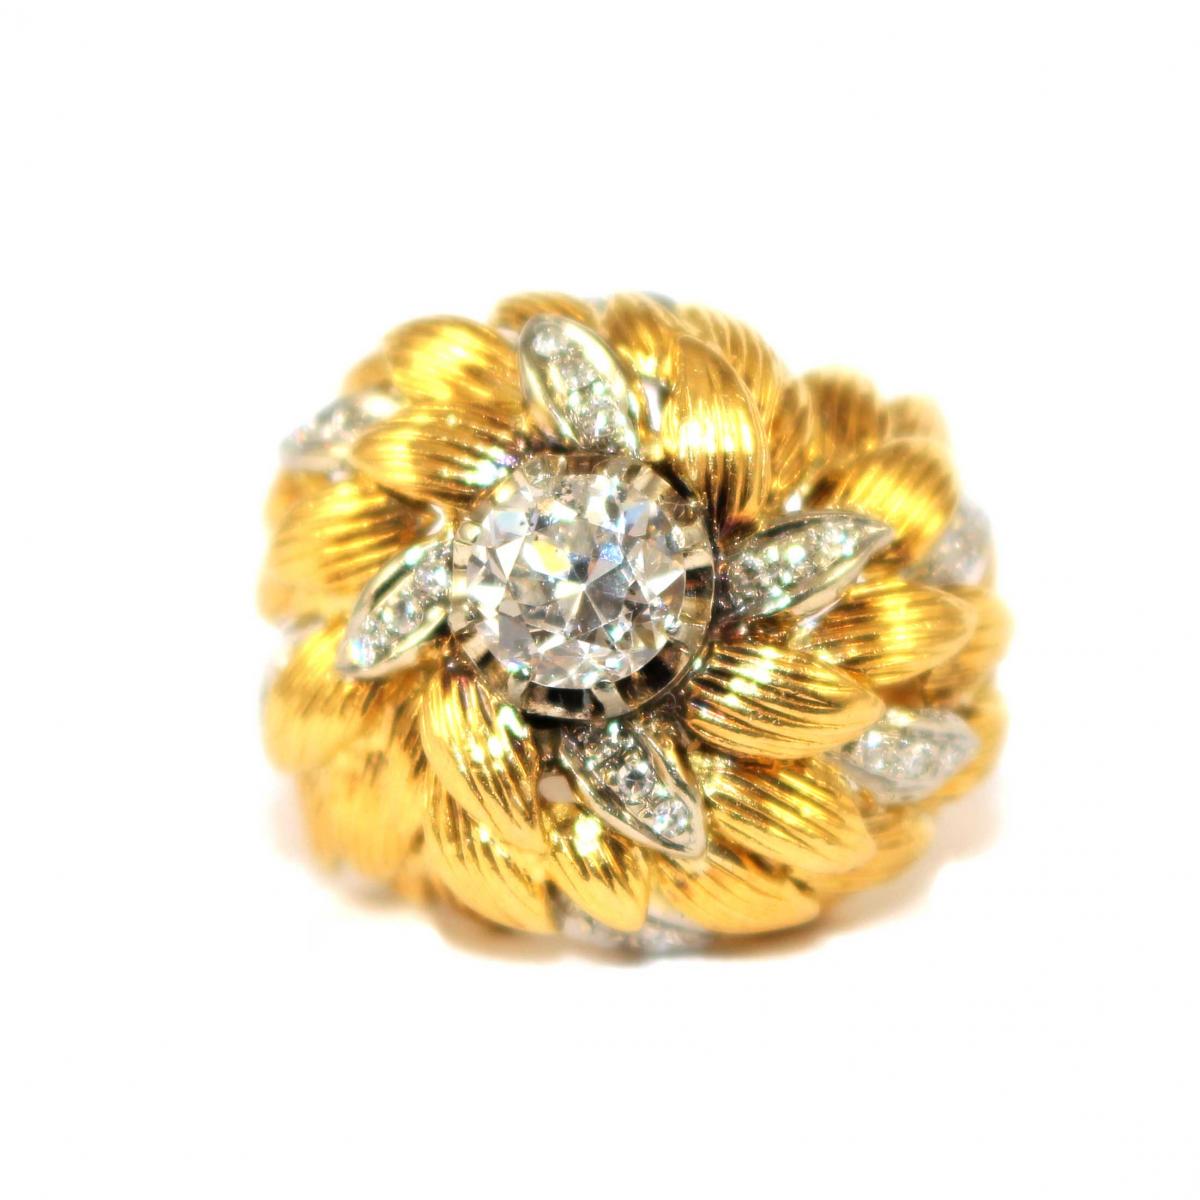 Bombe Diamond Ring c.1950 (possibly Kutchinsky)